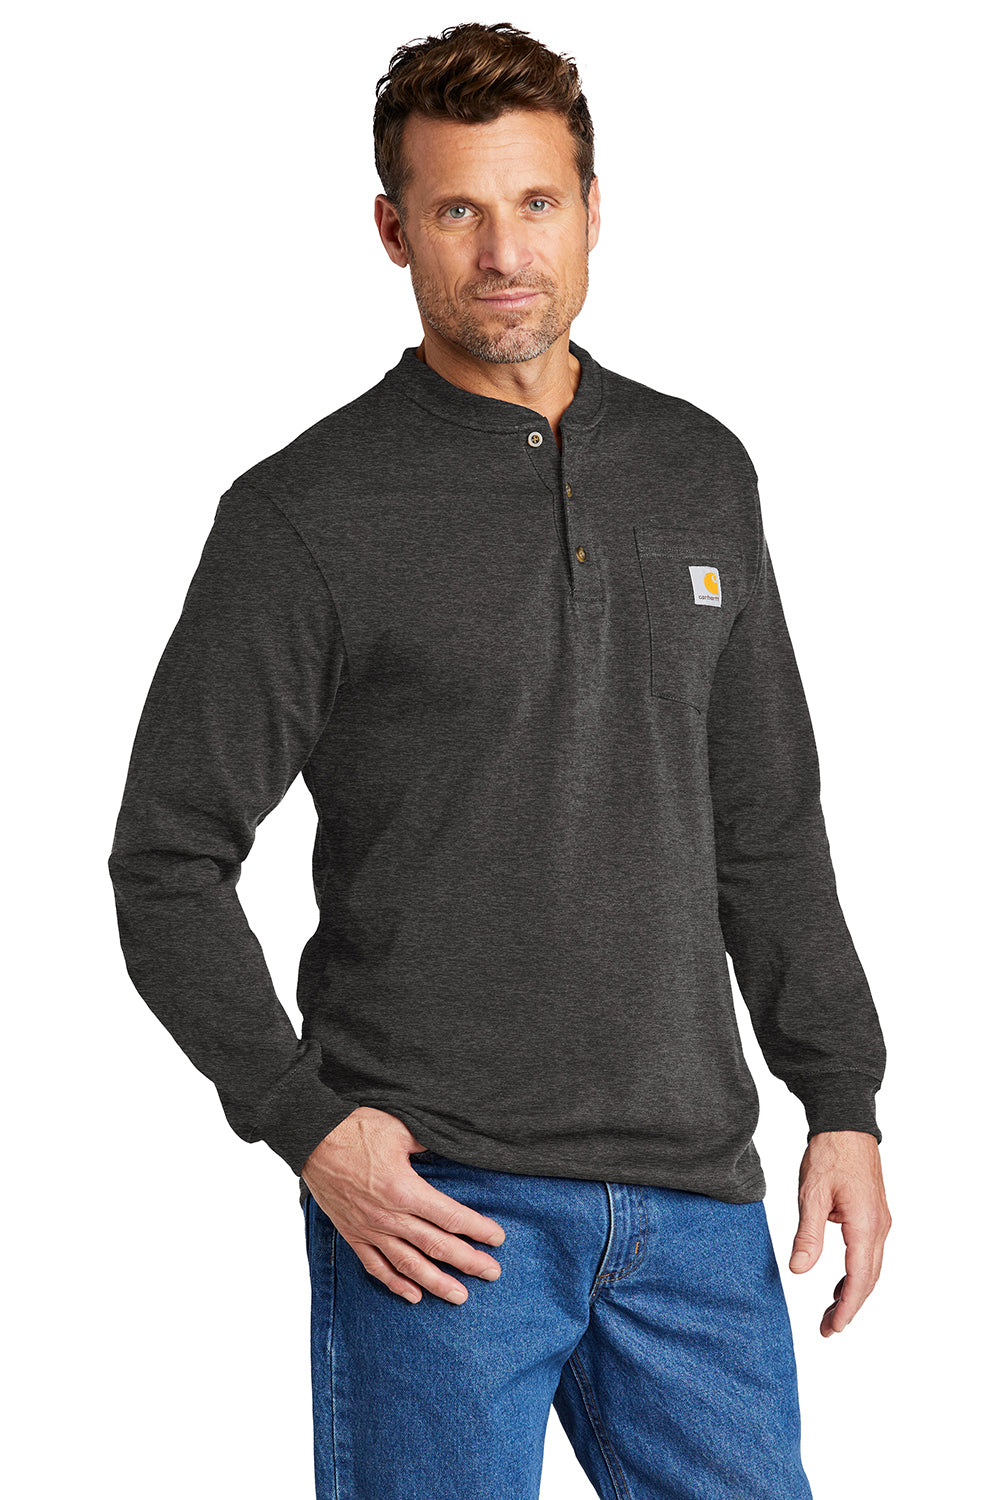 Carhartt CTK128 Mens Long Sleeve Henley T-Shirt w/ Pocket Heather Carbon Grey Model 3Q